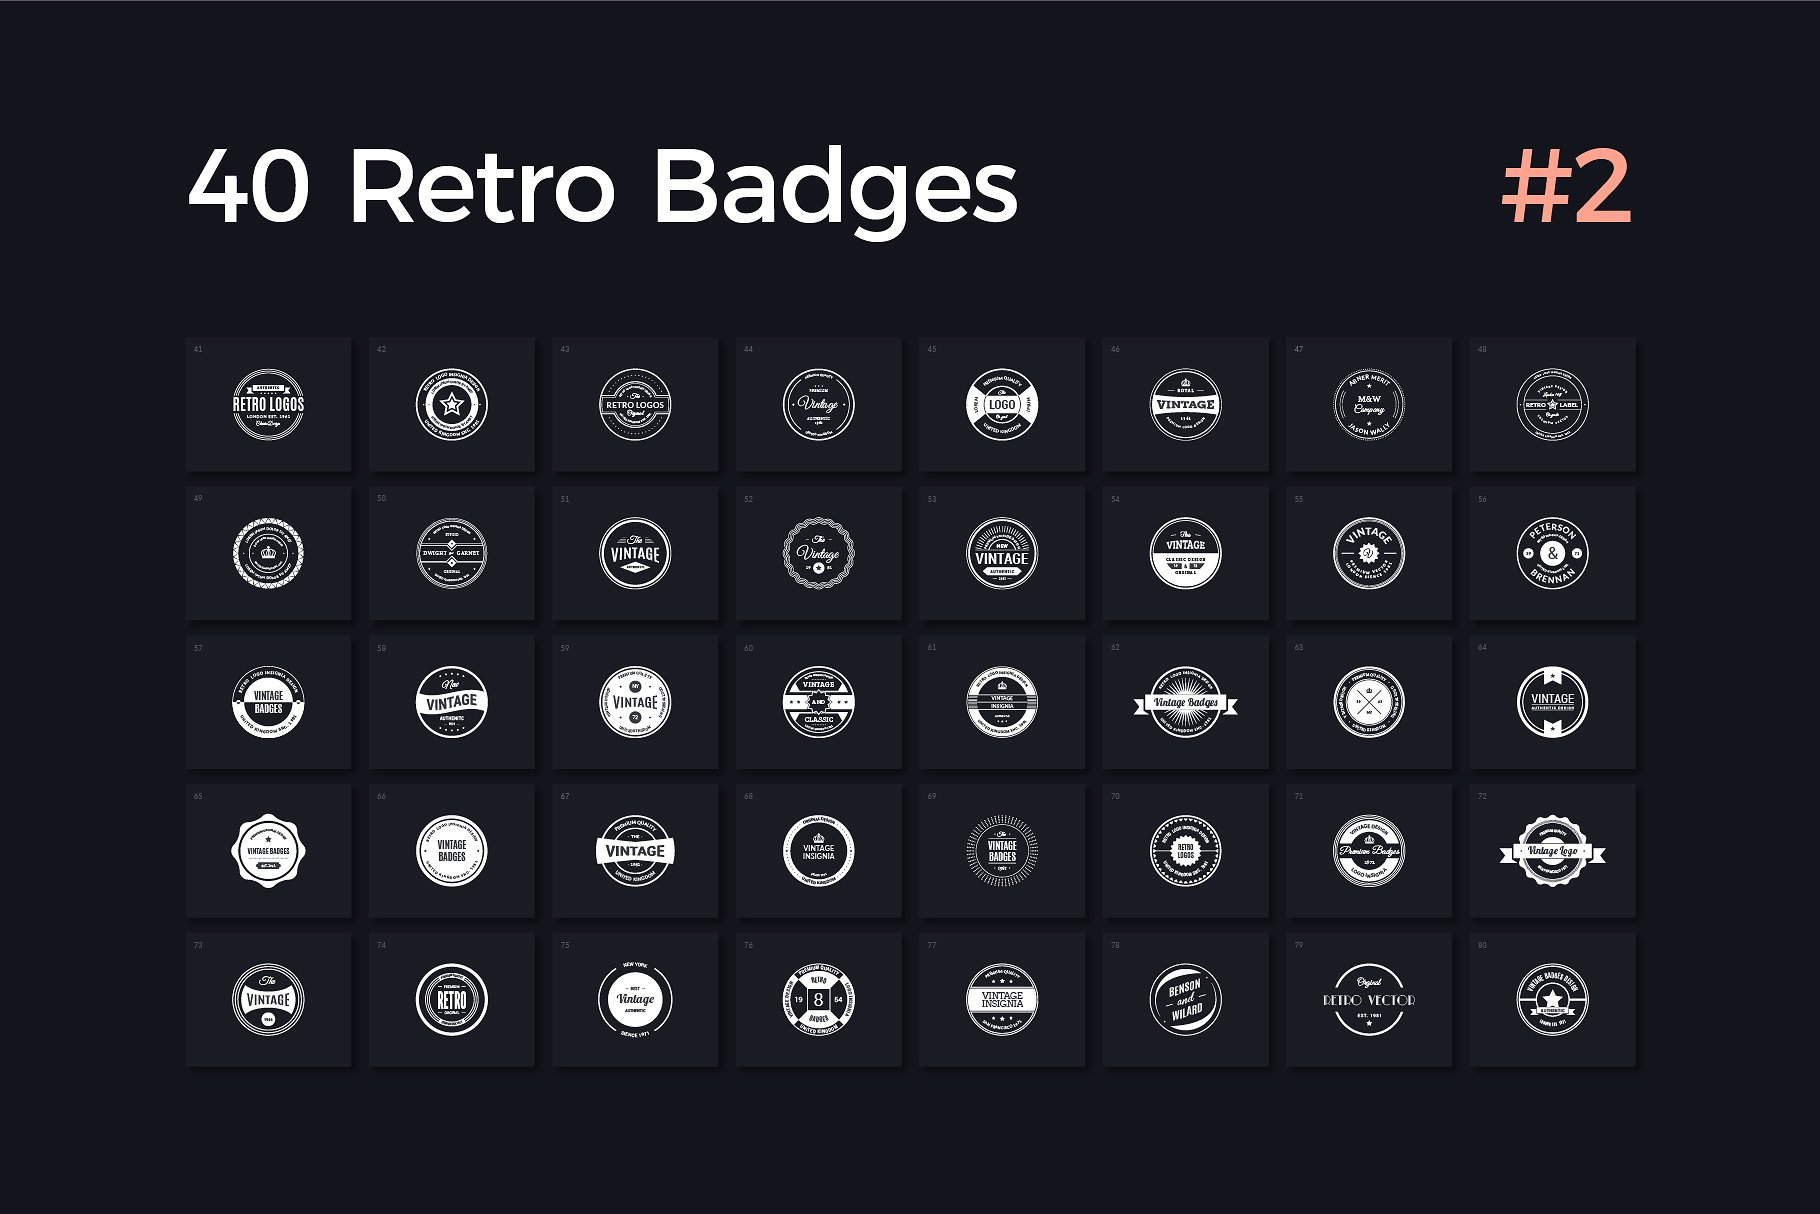 40款复古风徽章设计模板v2 40 Retro Badges Vol. 2插图